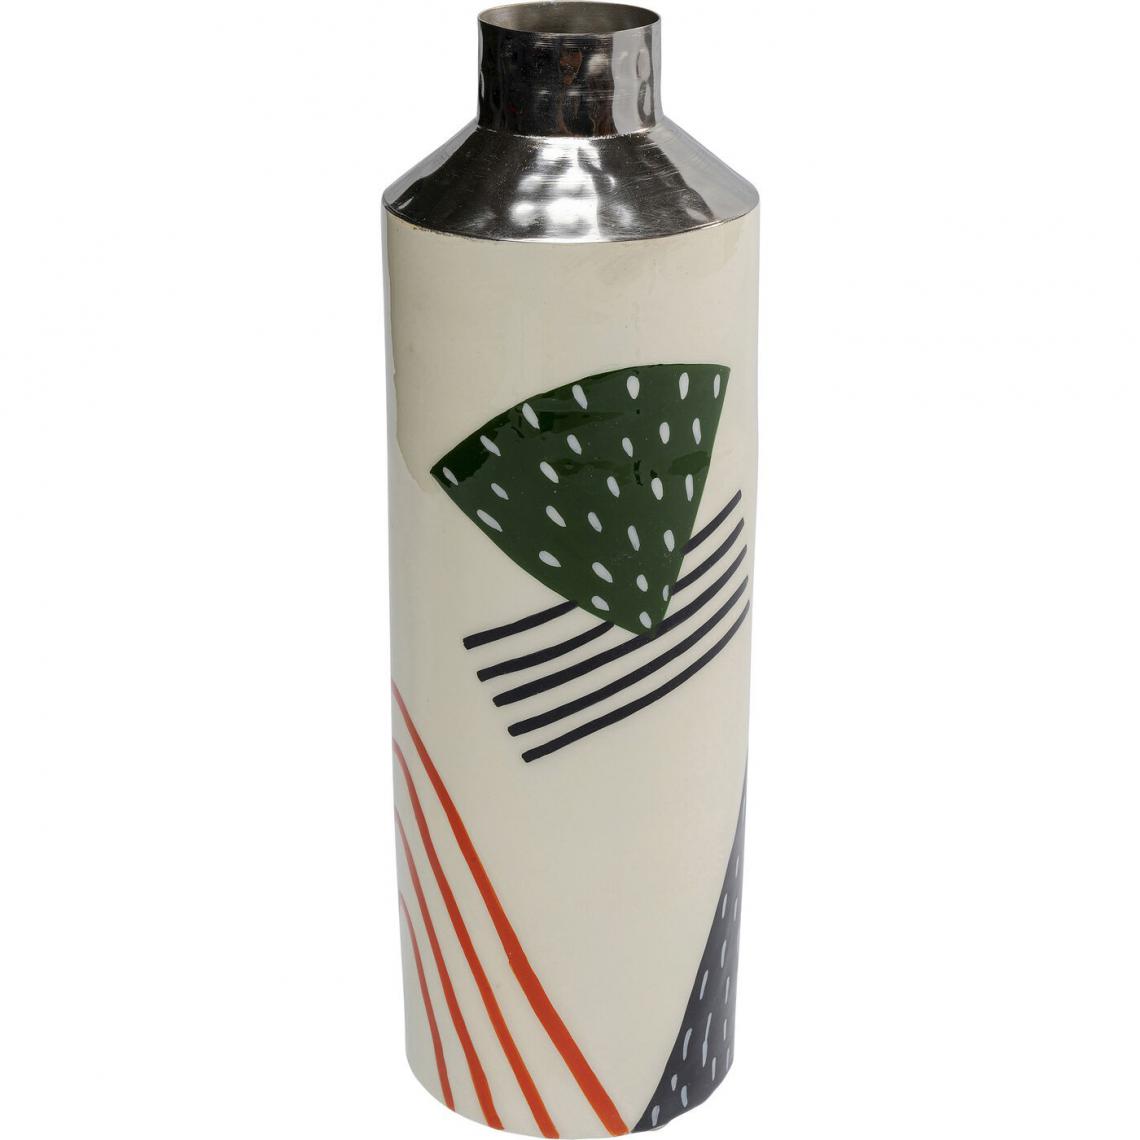 Karedesign - Vase Abstract Counterpart 32cm Kare Design - Vases